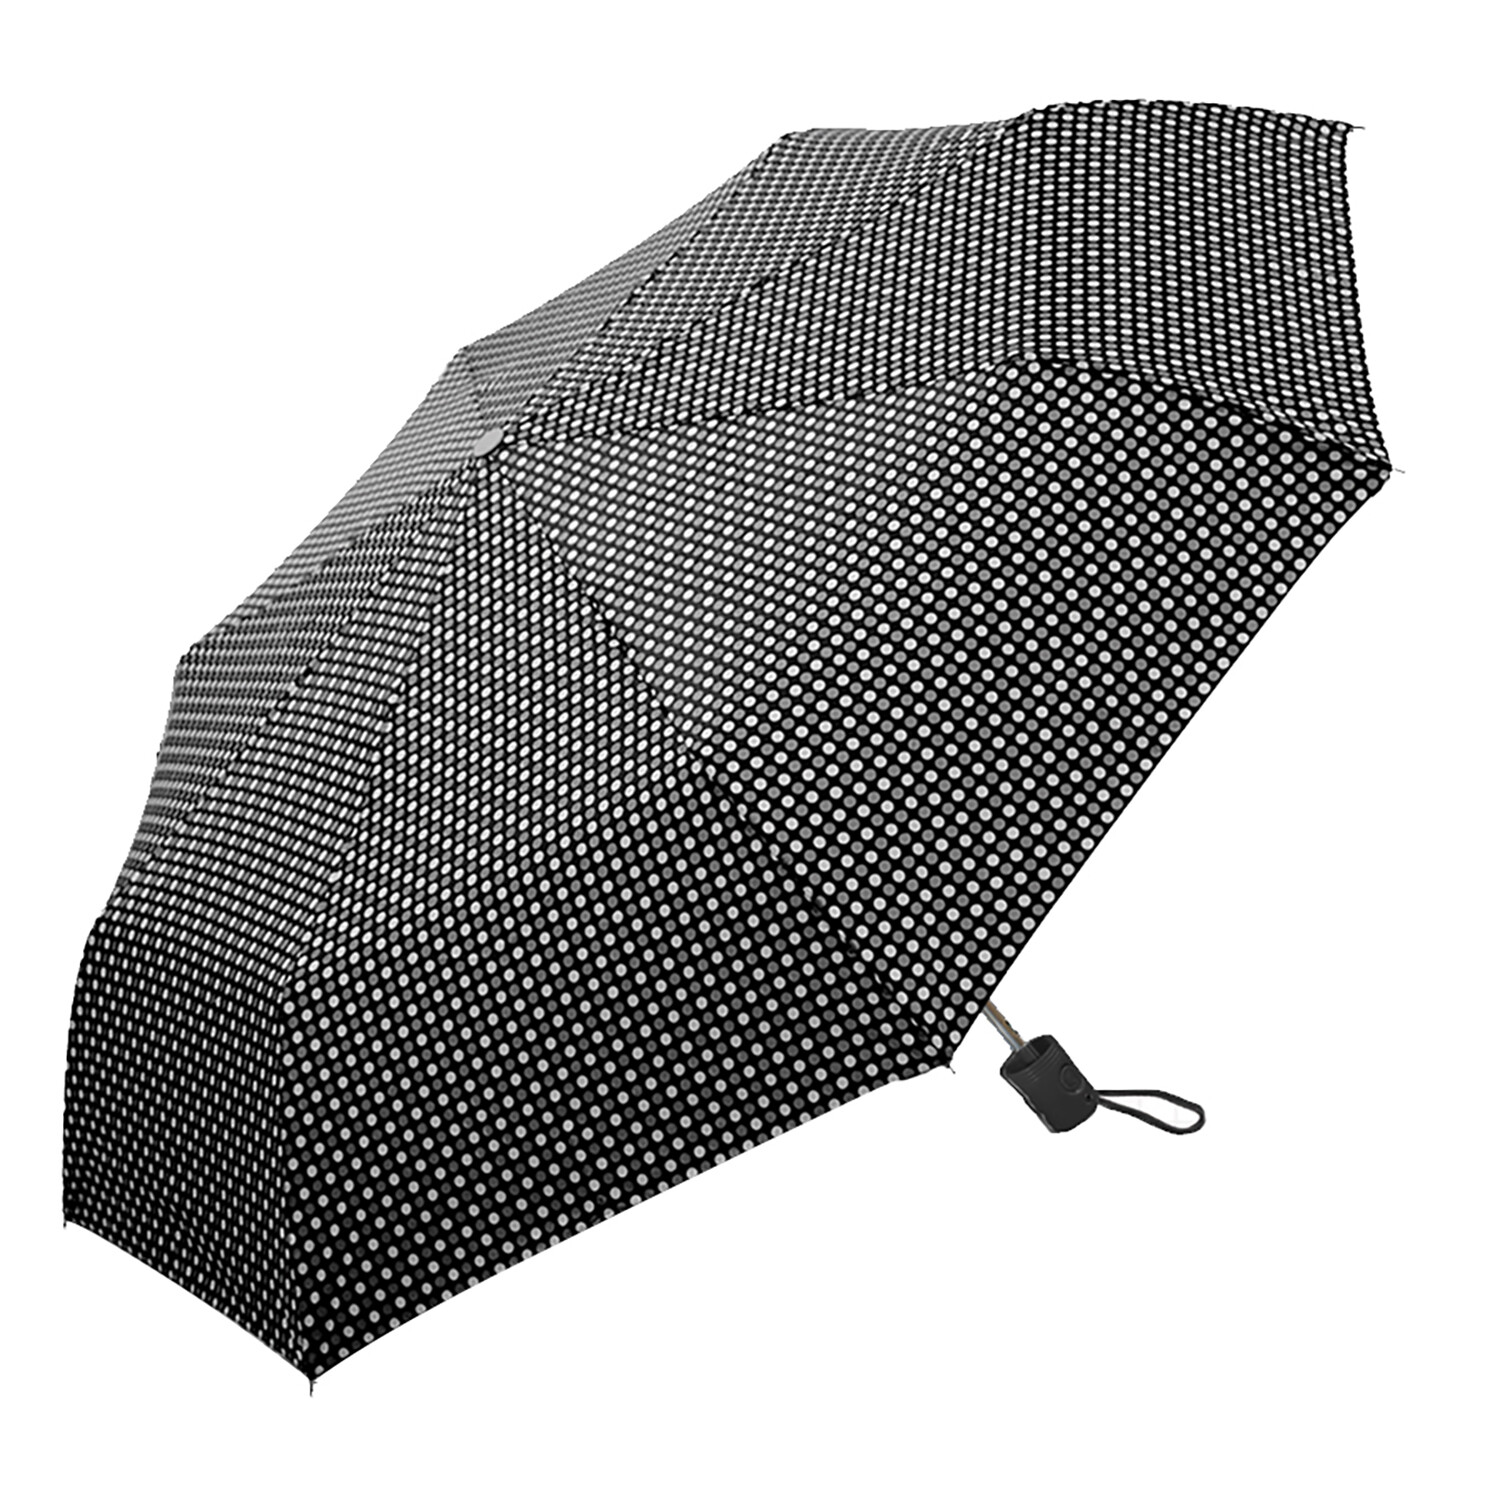 Automatic Opening Mini Printed Umbrella Image 1